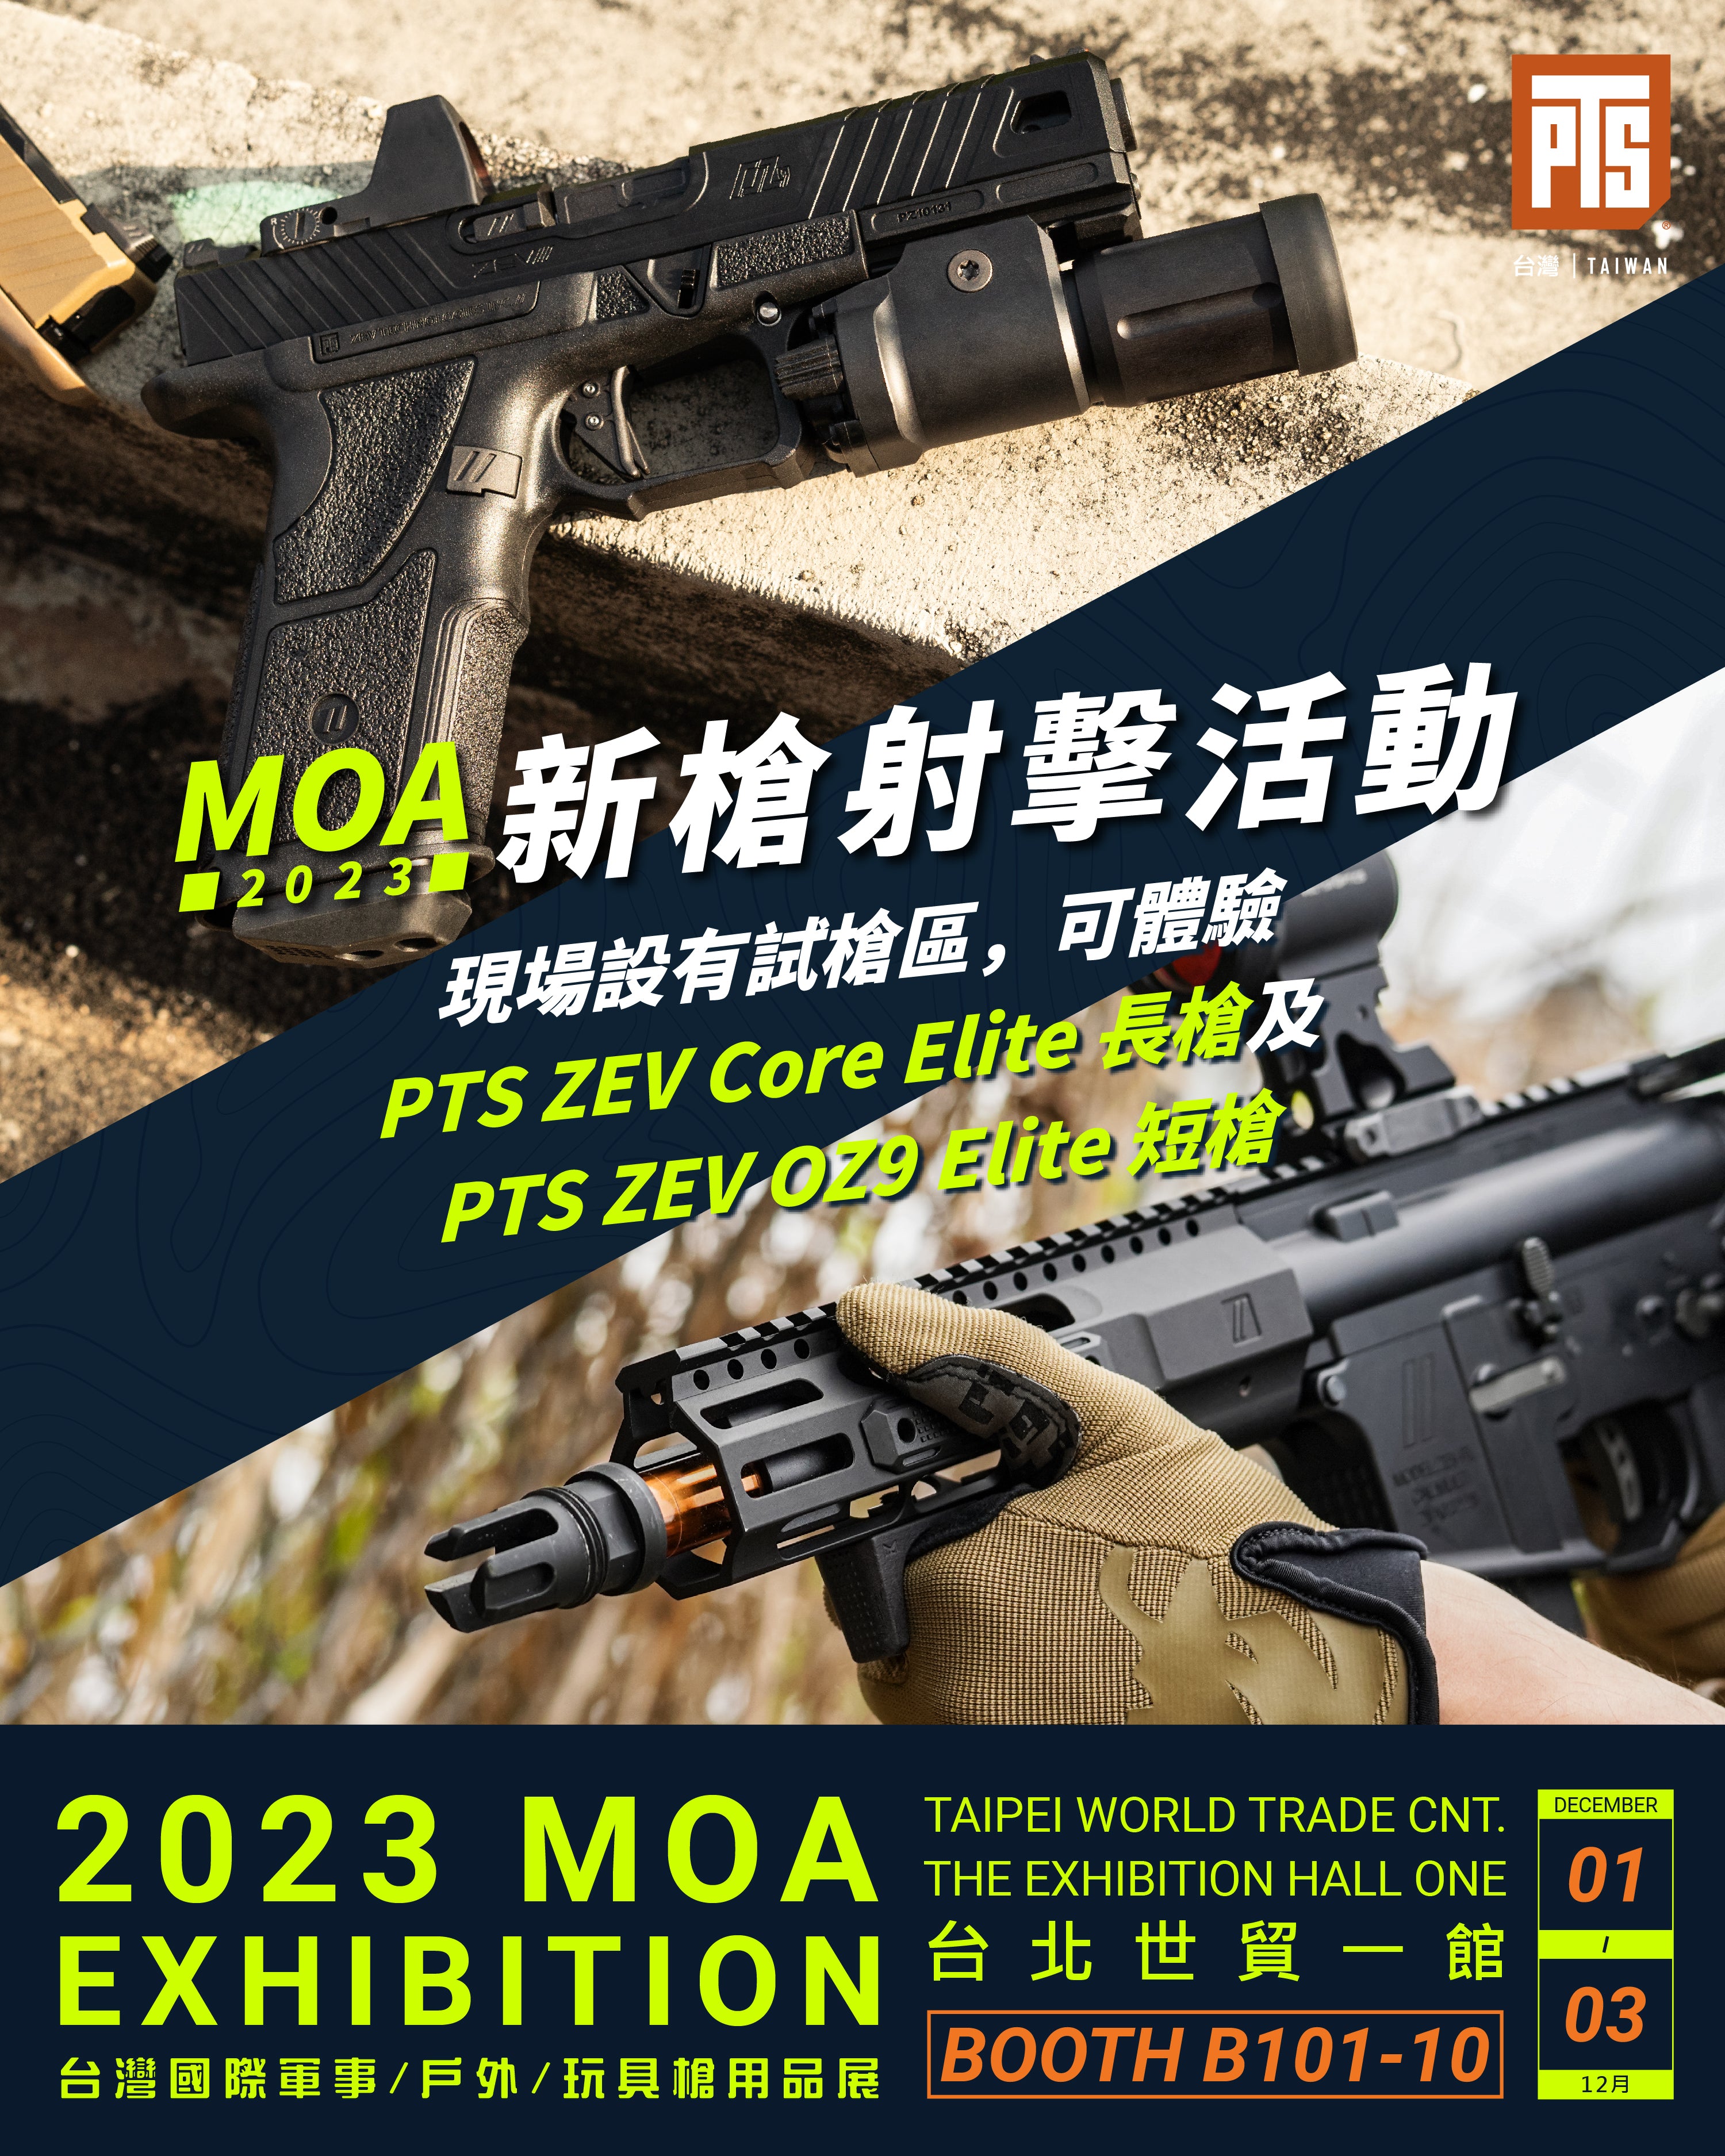 MOA 展場活動 : PTS ZEV 長槍及短槍試射活動